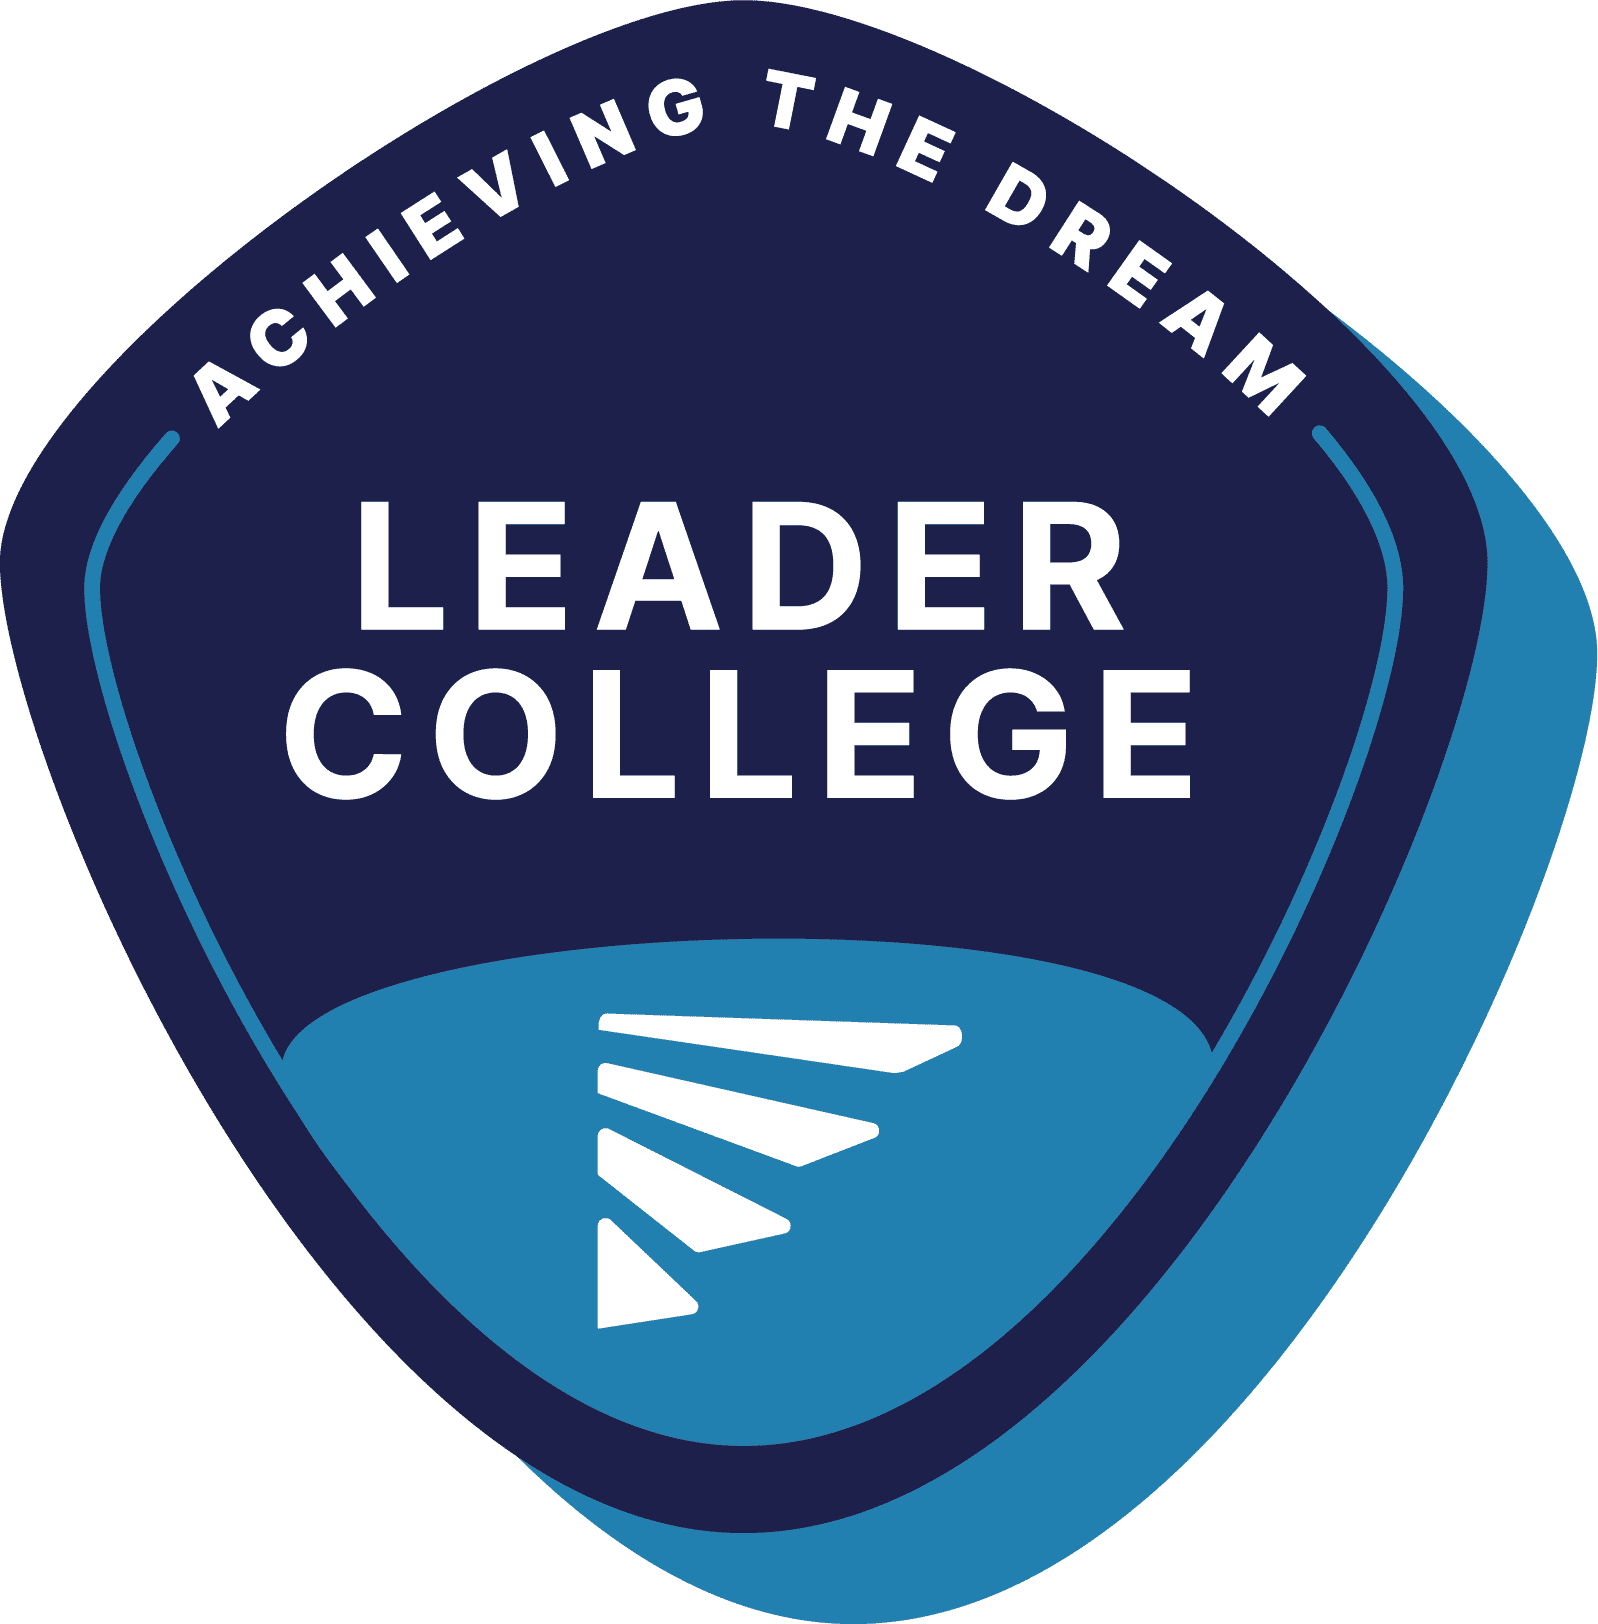 Achieving the Dream Leader College badge